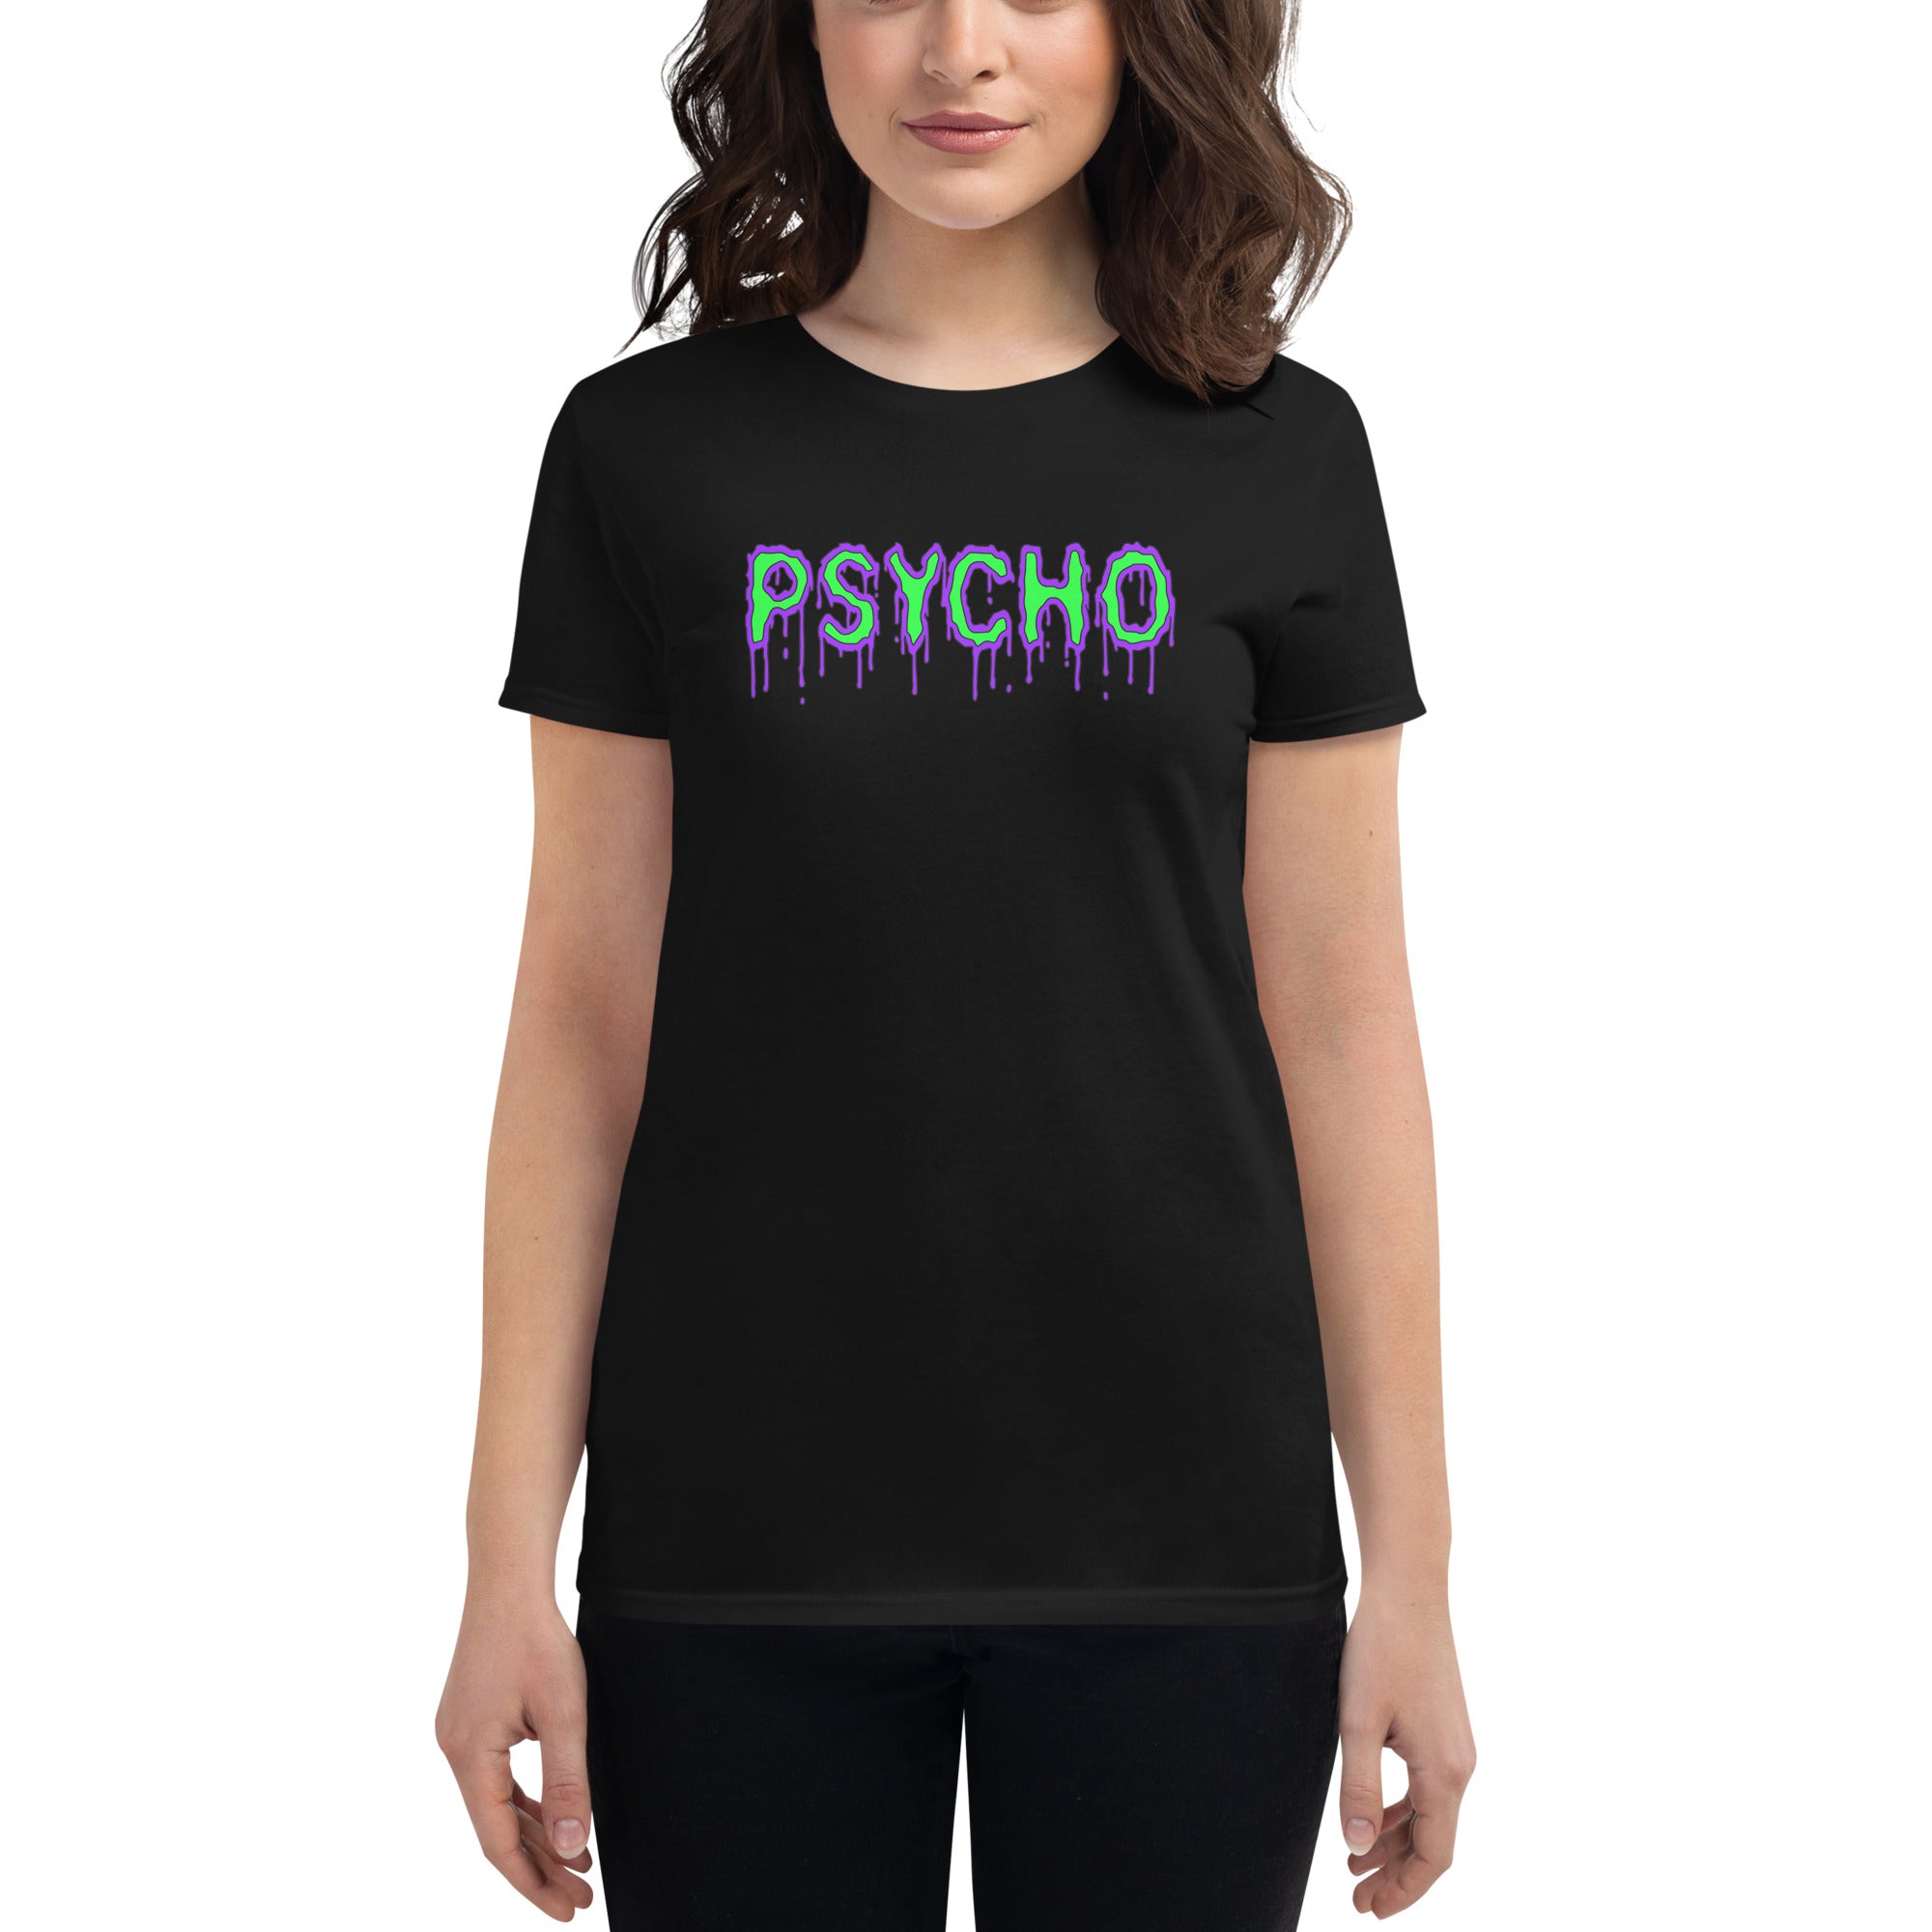 Psycho Mental Personality Women's Short Sleeve Babydoll T-shirt